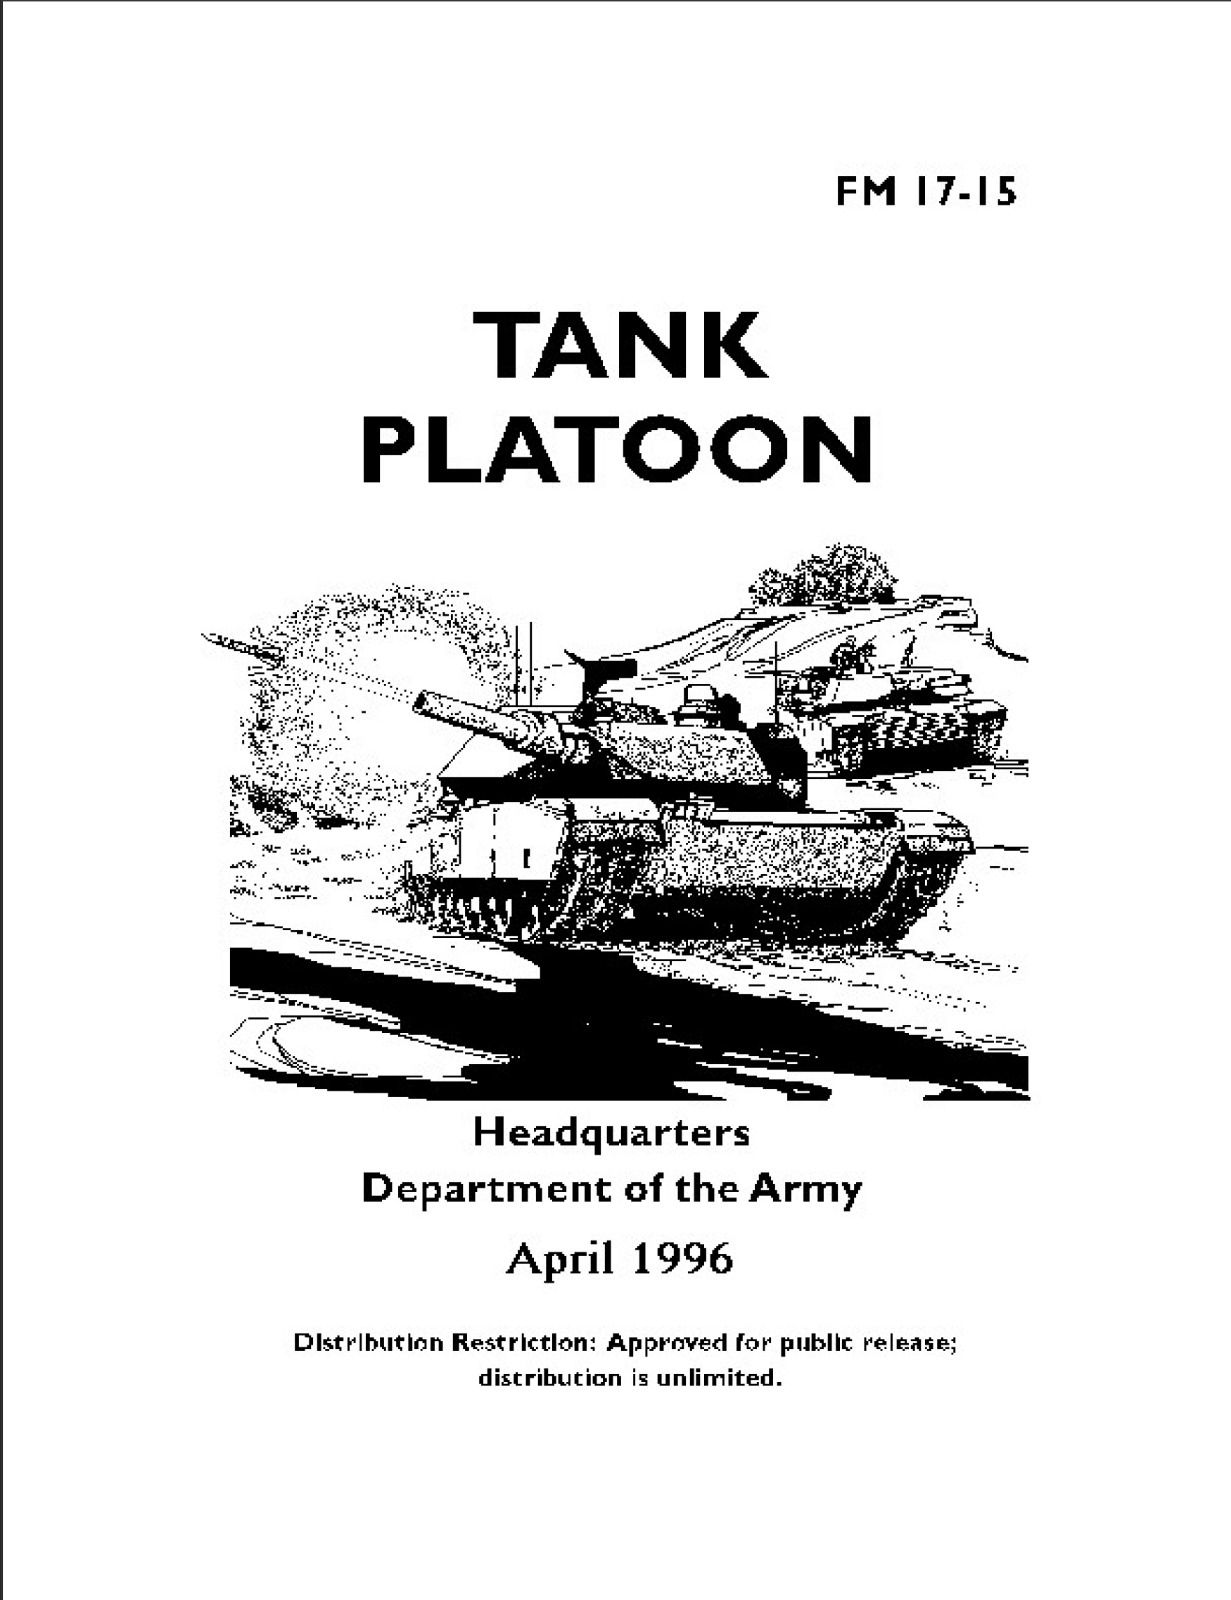 296 Page 1996 FM 17-15 Tank Platoon M1 M1A1 M1A2 Abrams M8-AGS Pub on Data CD